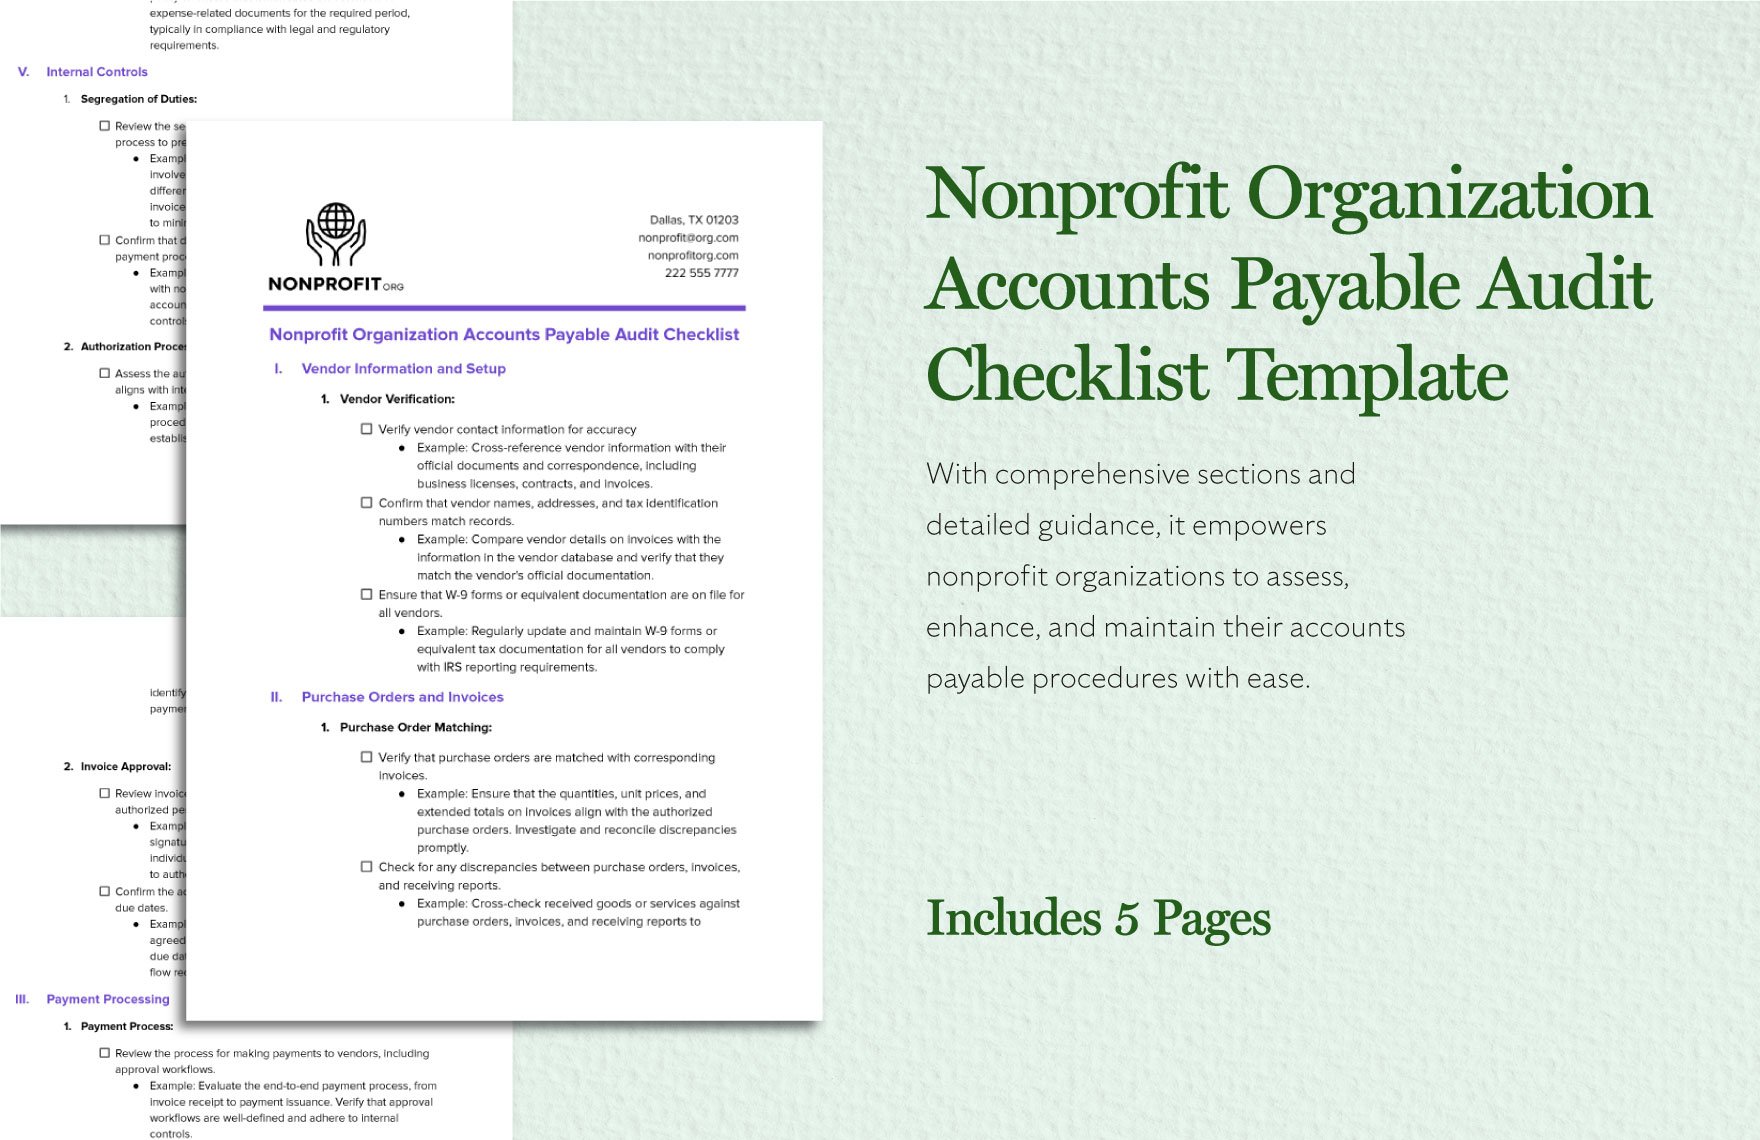 Nonprofit Organization Accounts Payable Audit Checklist Template